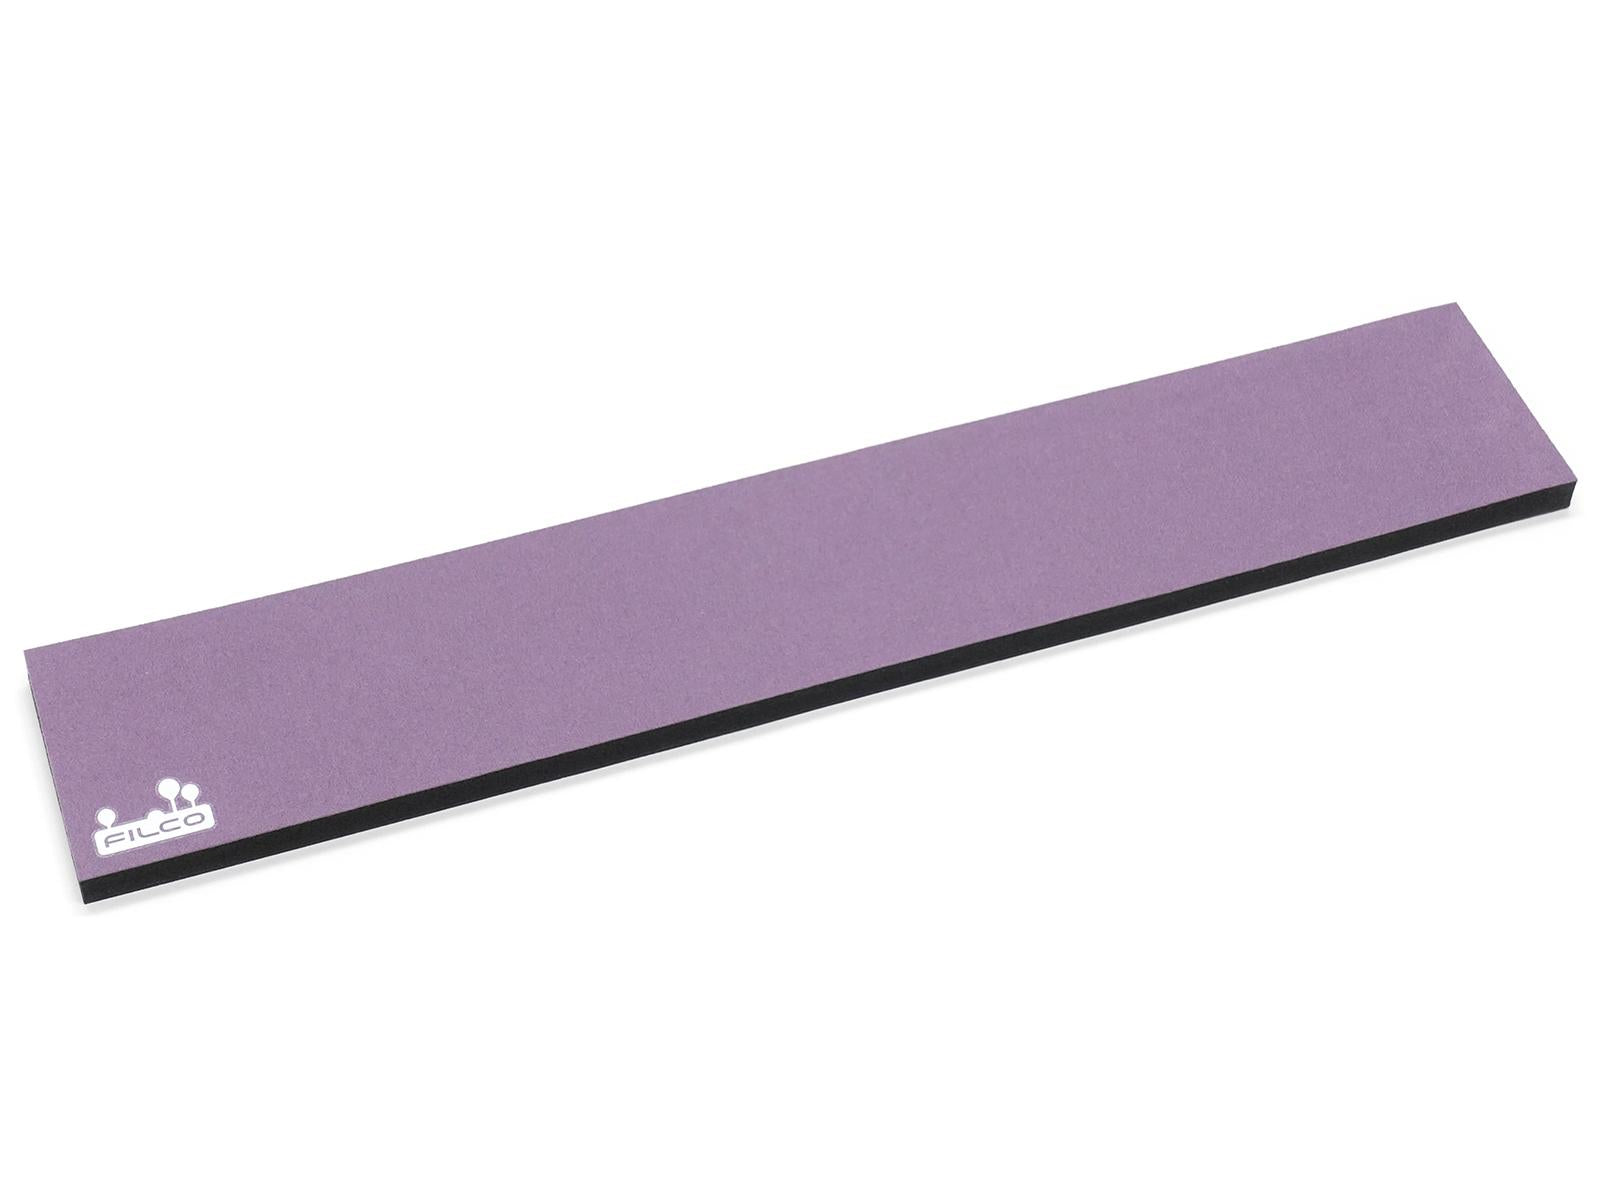 FILCO Majestouch Macaron Wrist Rest Lavender Large (12mm) MKP3R507WF |0|